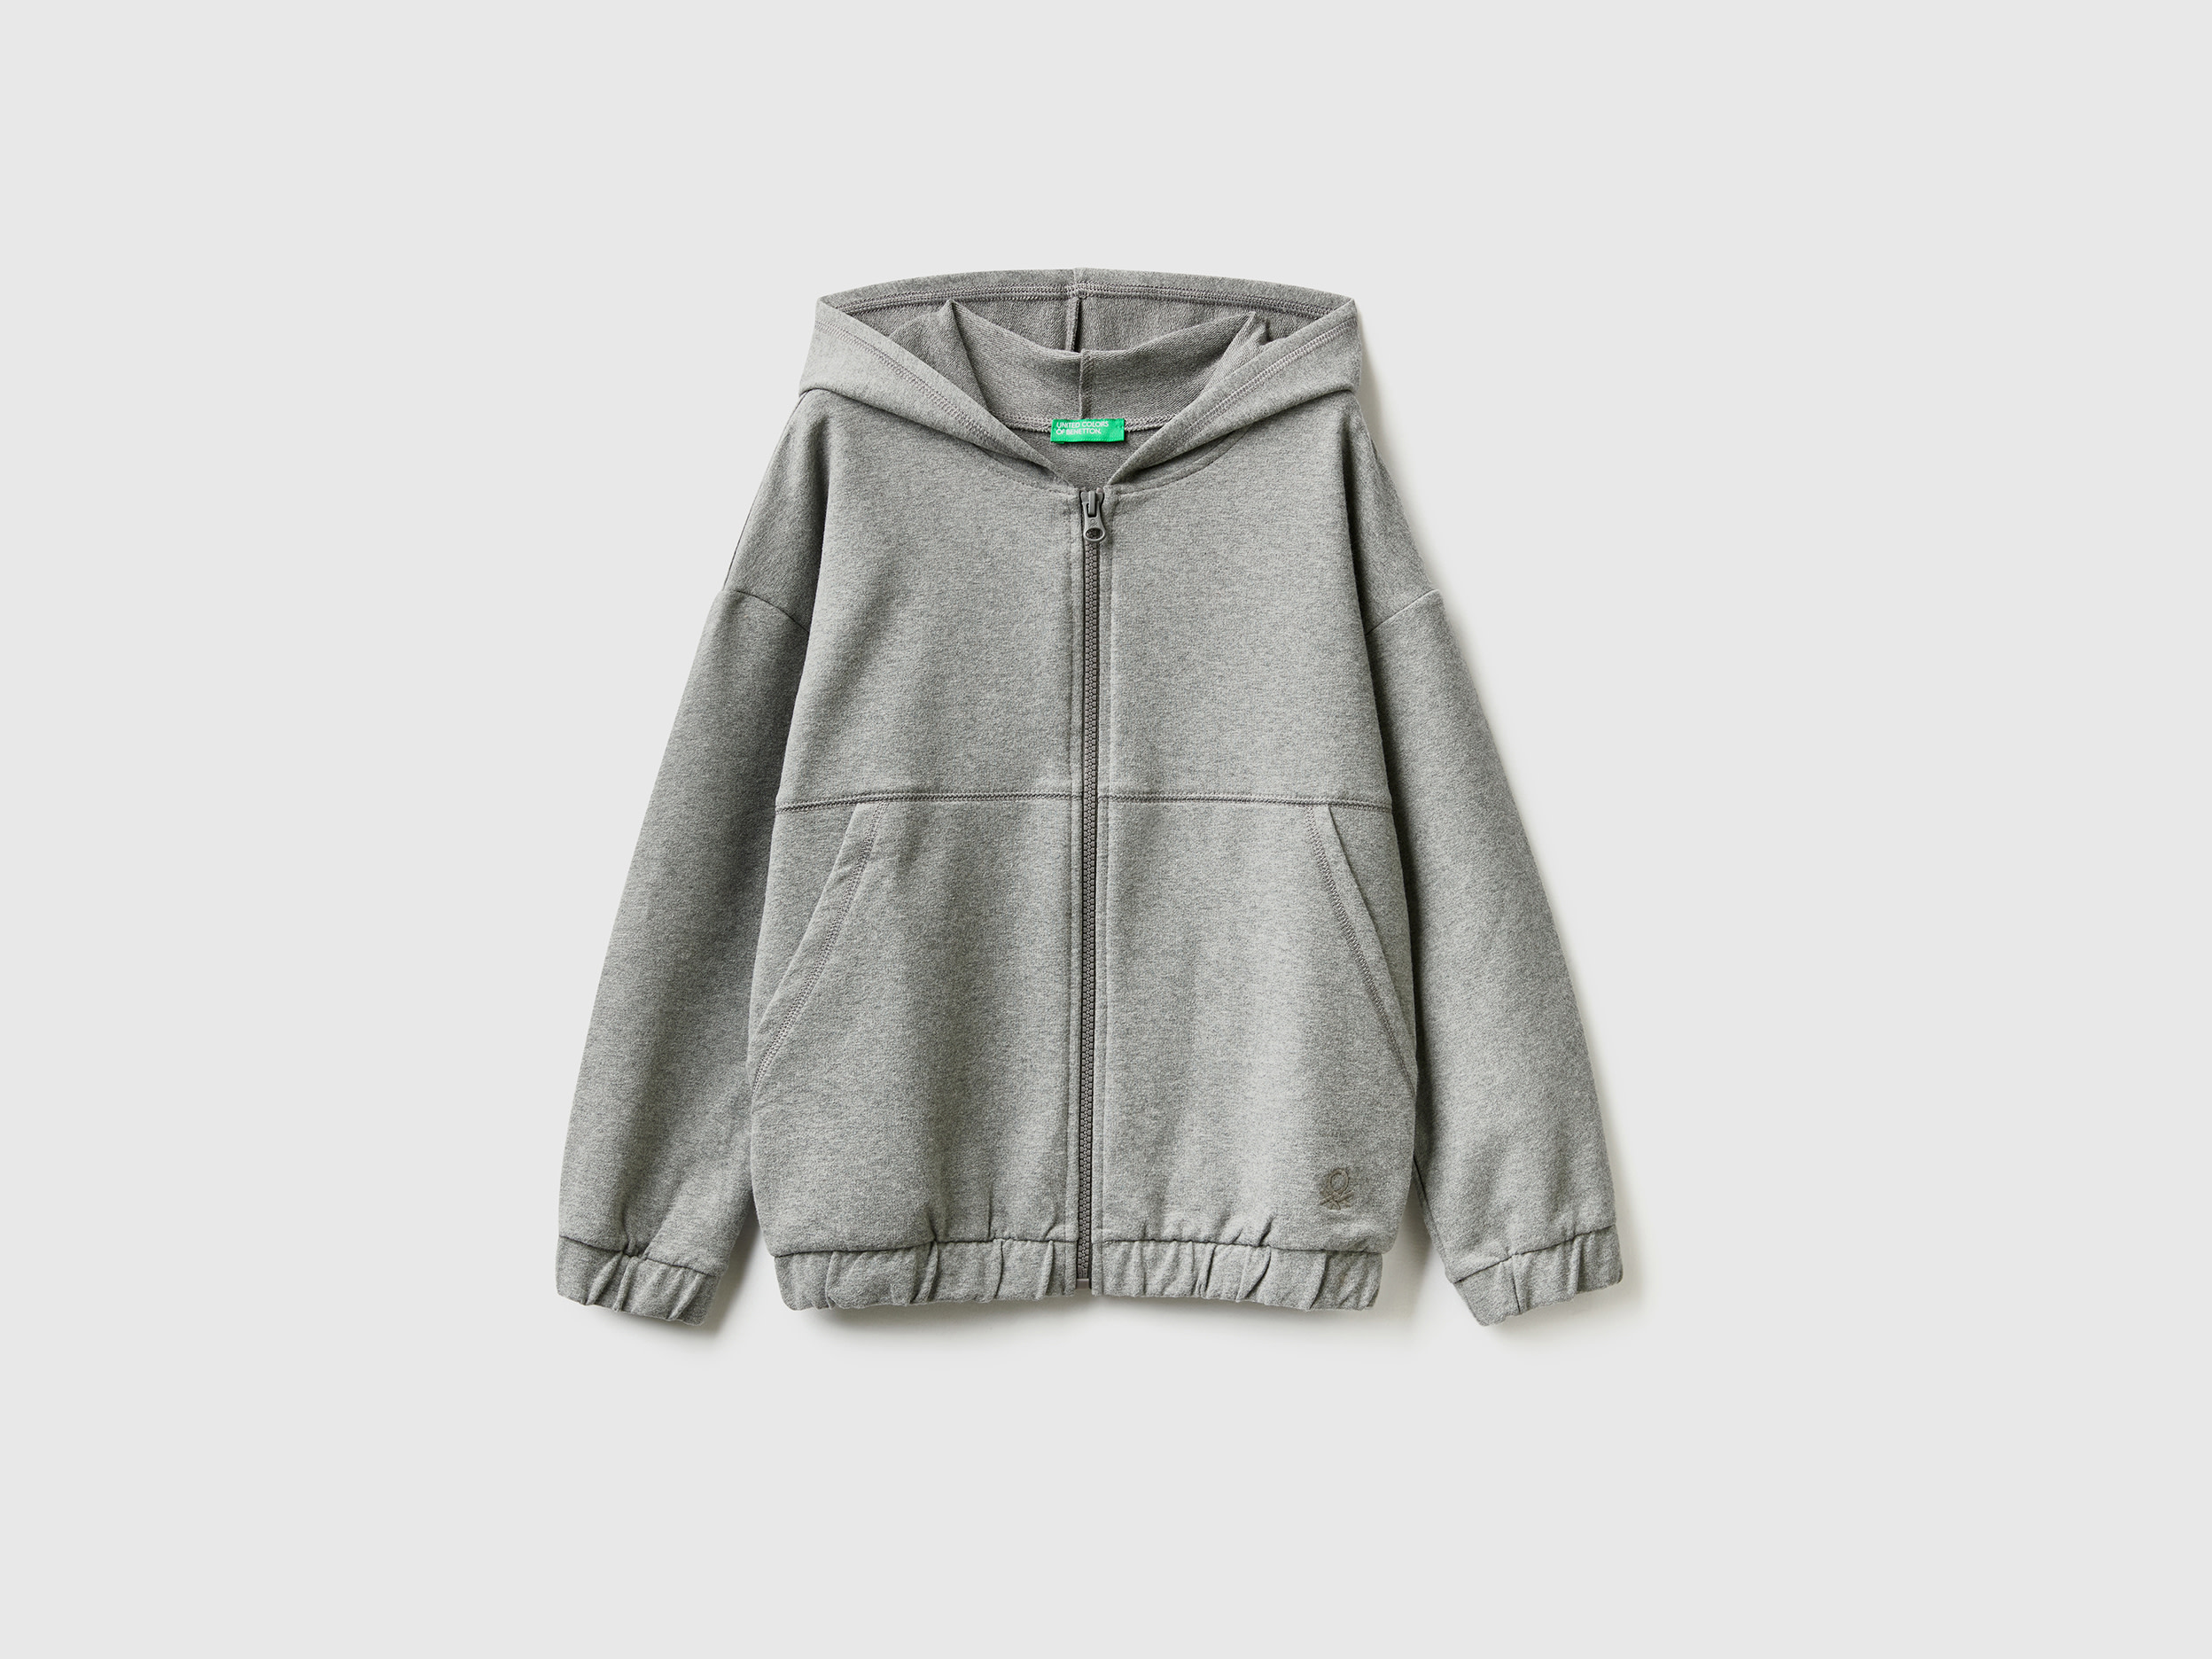 Benetton, Warm Sweatshirt With Zip And Embroidered Logo, size S, Dark Gray, Kids